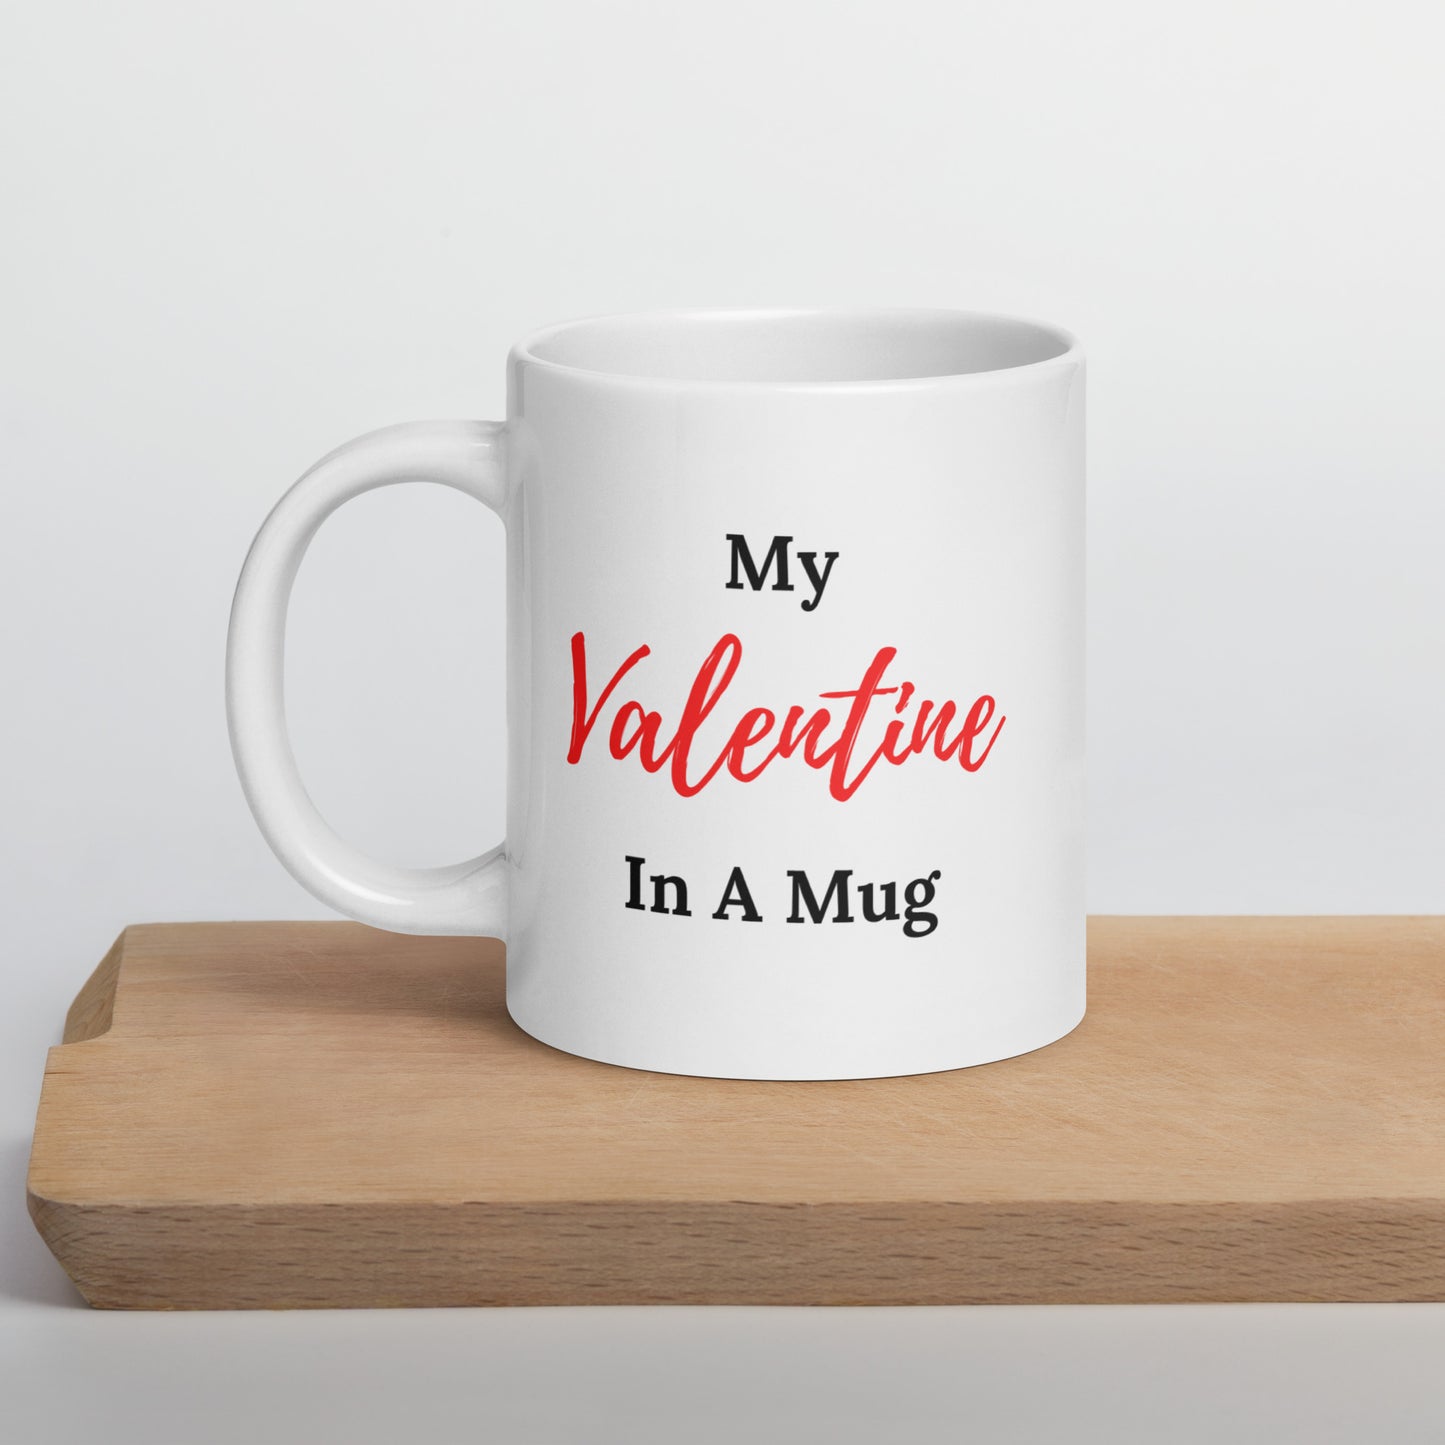 My Valentine In A Mug, Anti Valentine Gift, Single Valentine Coffee Mug, Funny Valentine Saying, Funny Valentine Gift, Anti Valentine's Day